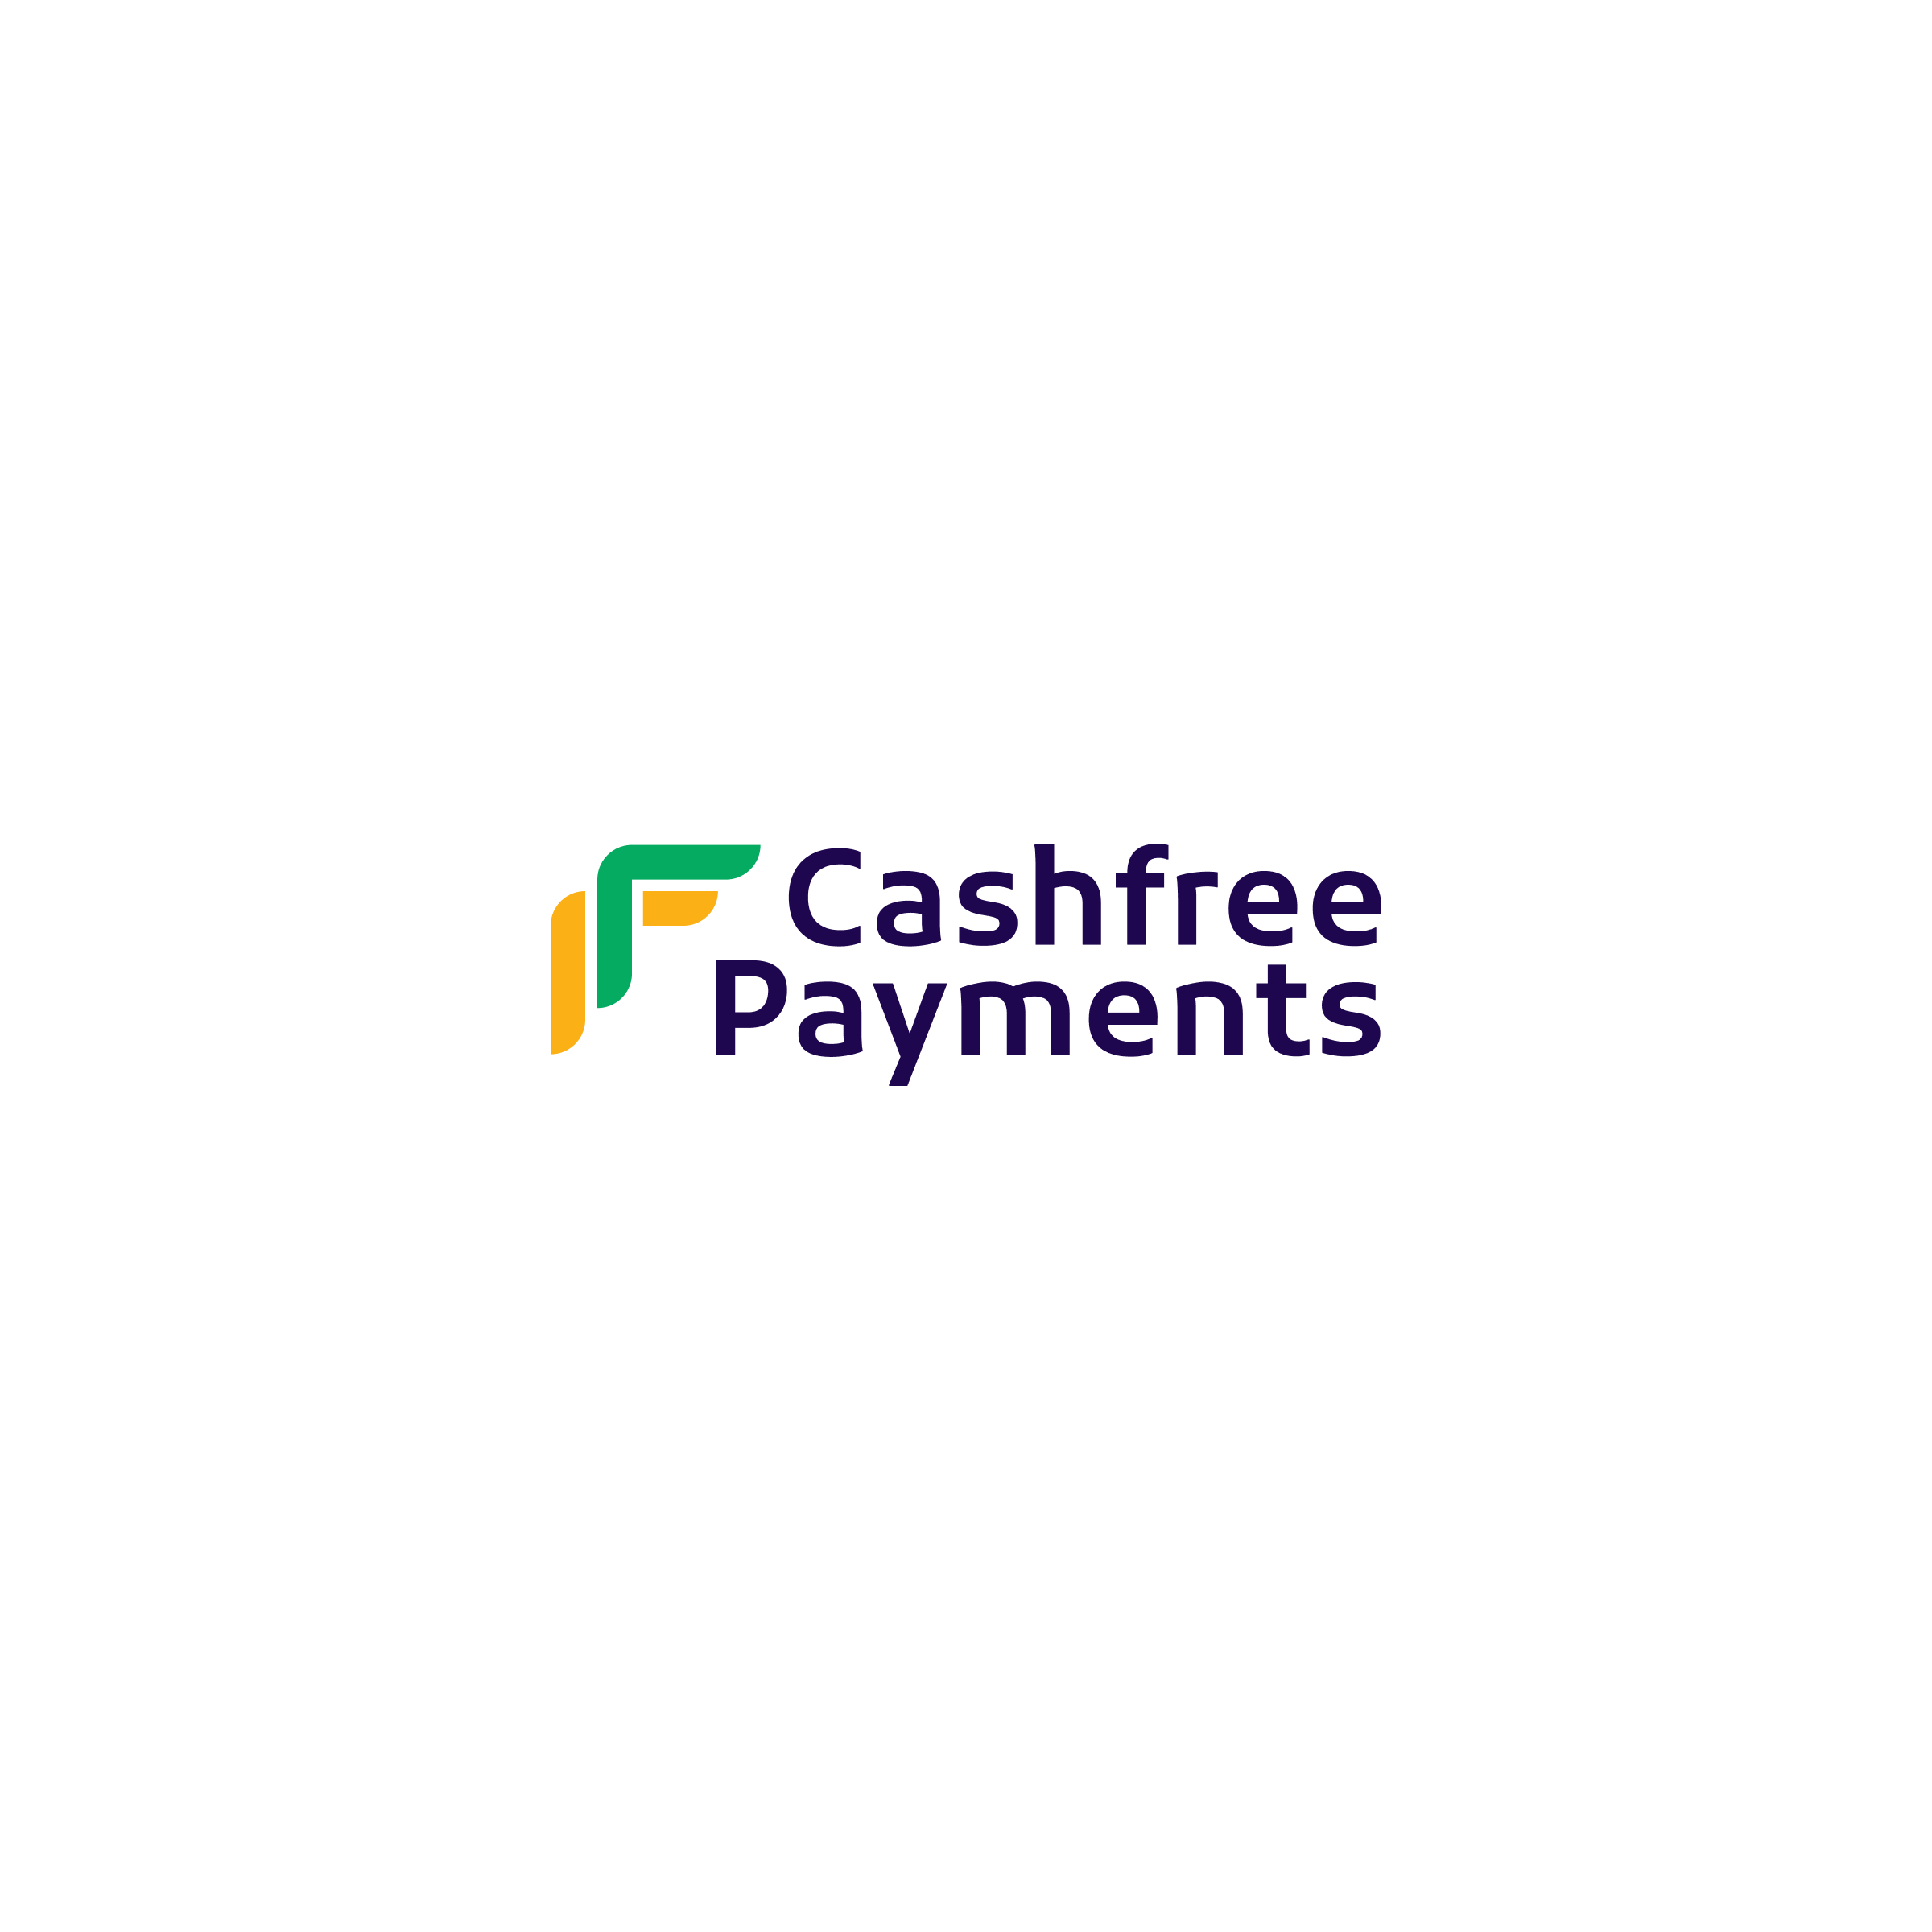 Cashfree Payments acquires Zecpe to strengthen its D2C Payments Suite